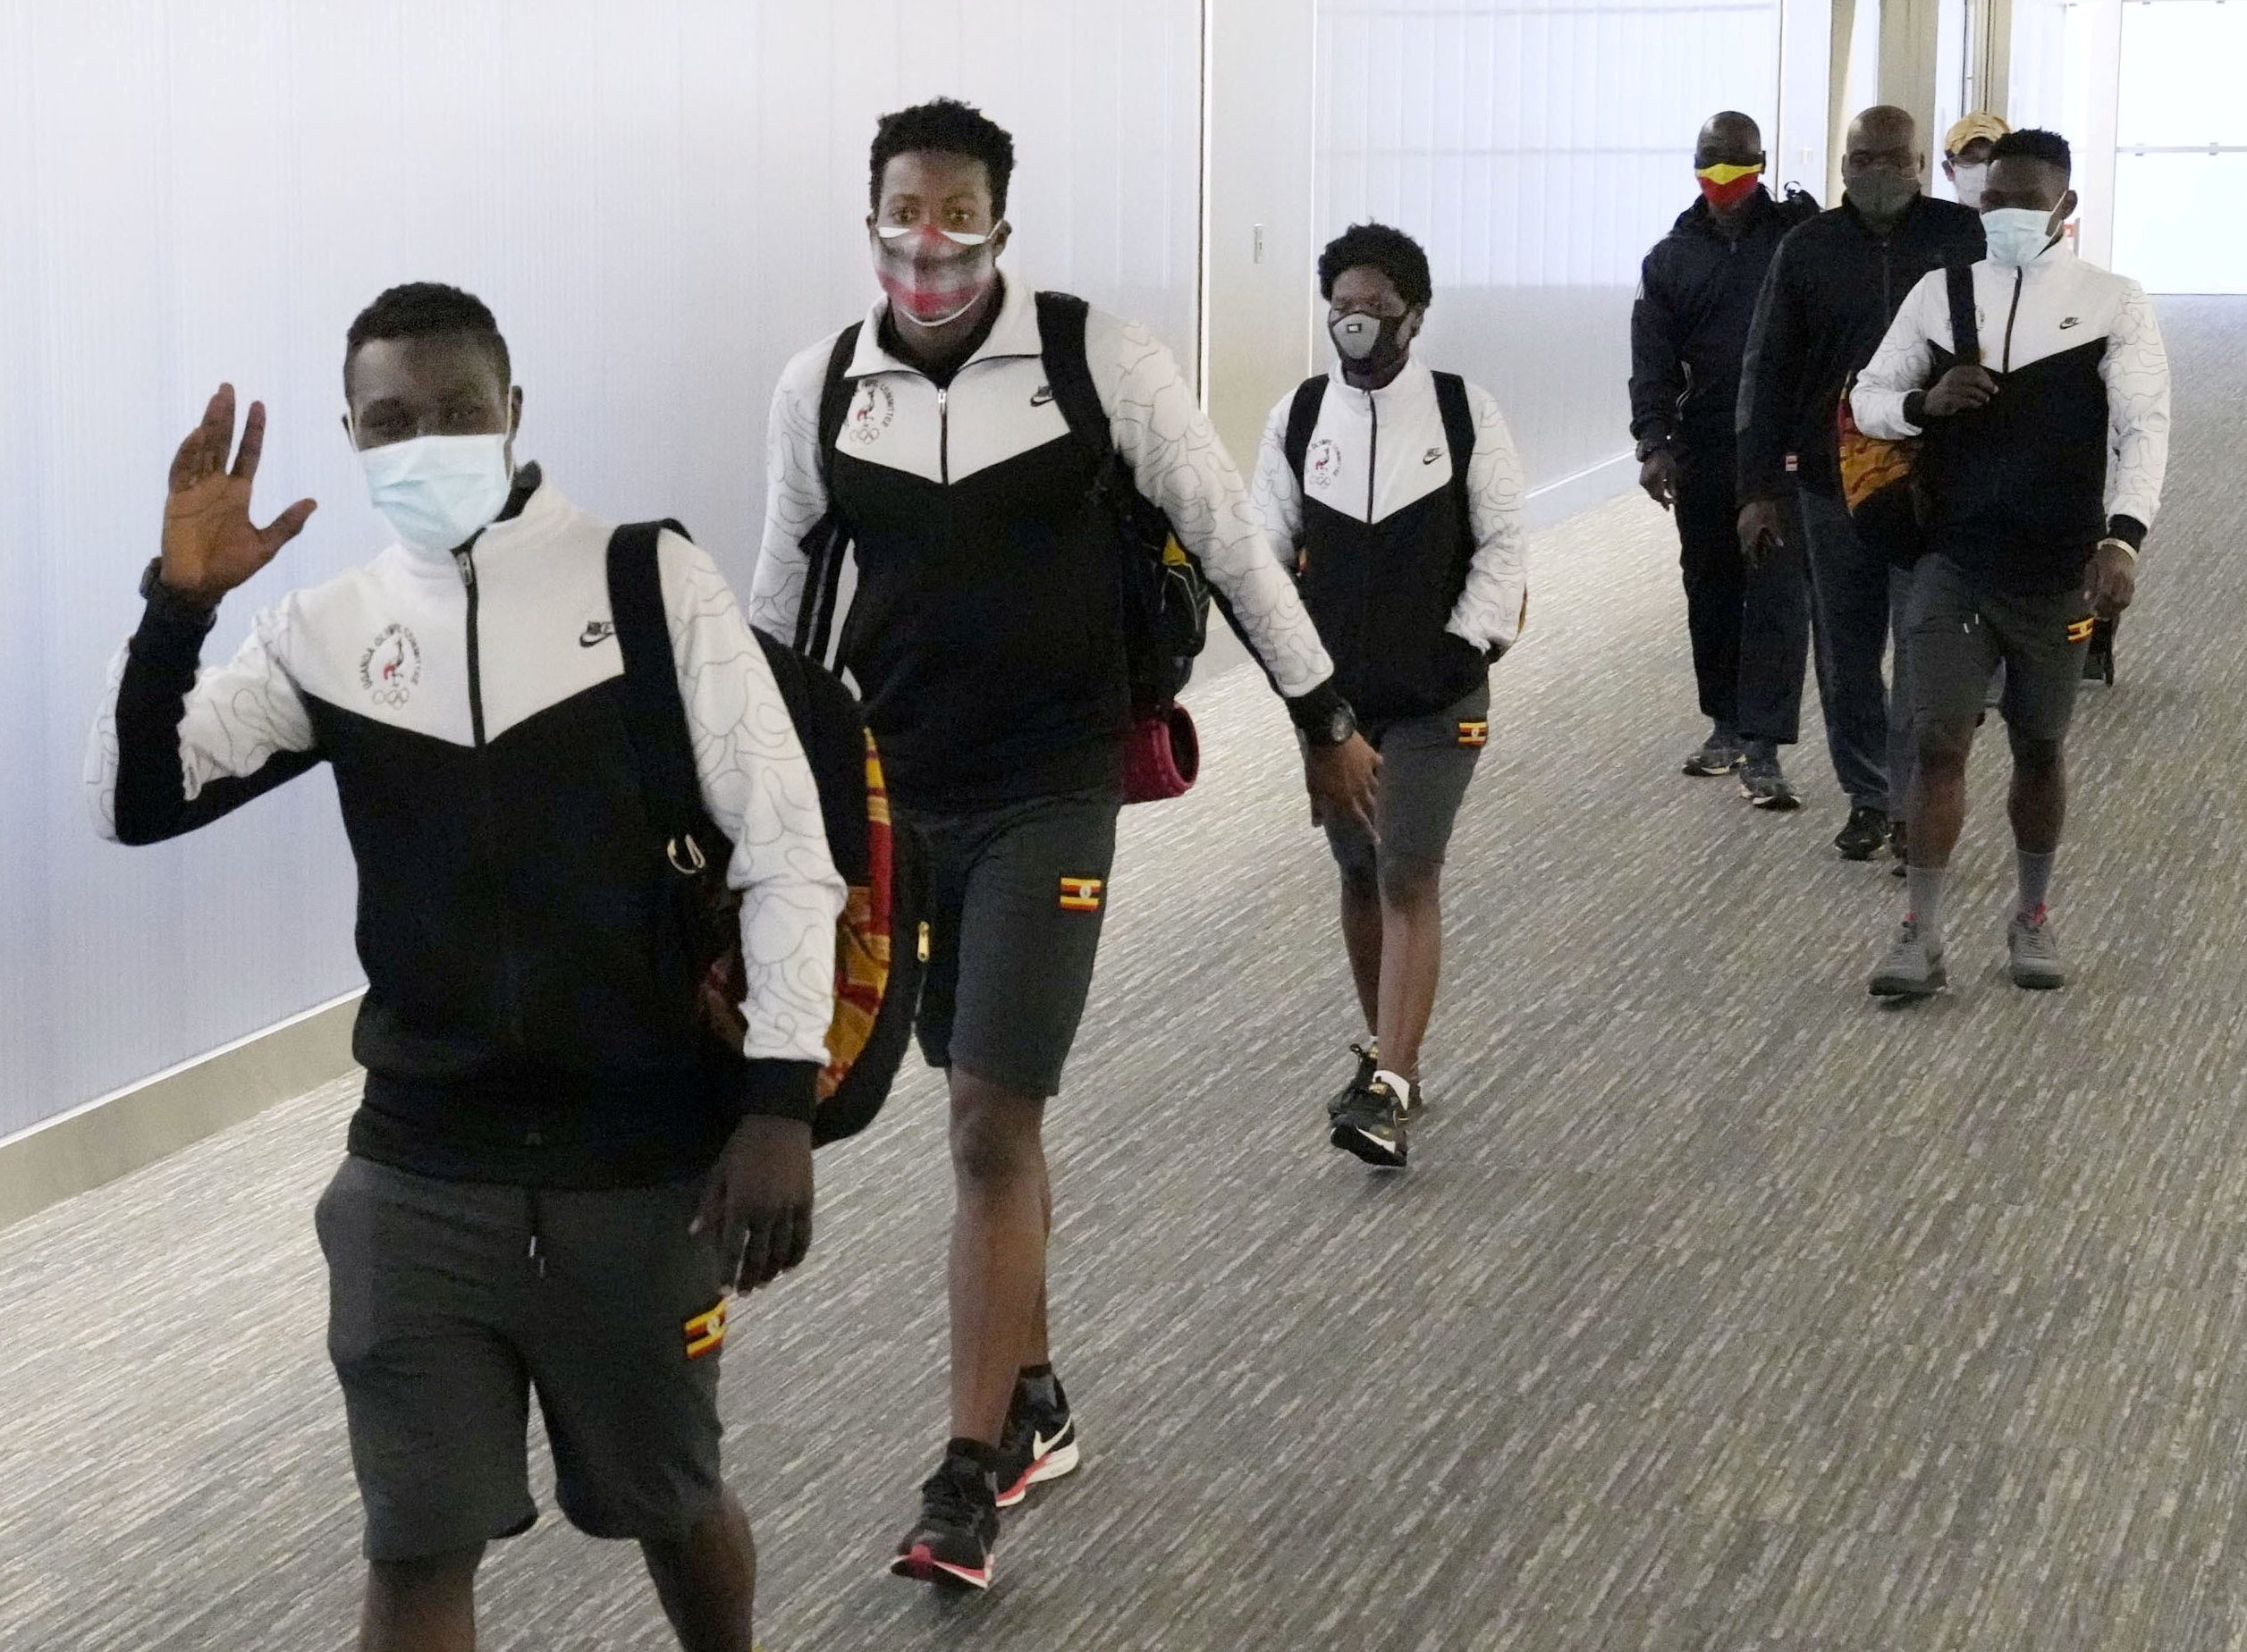 Uganda Olympic team member tests positive for coronavirus on arrival in Japan